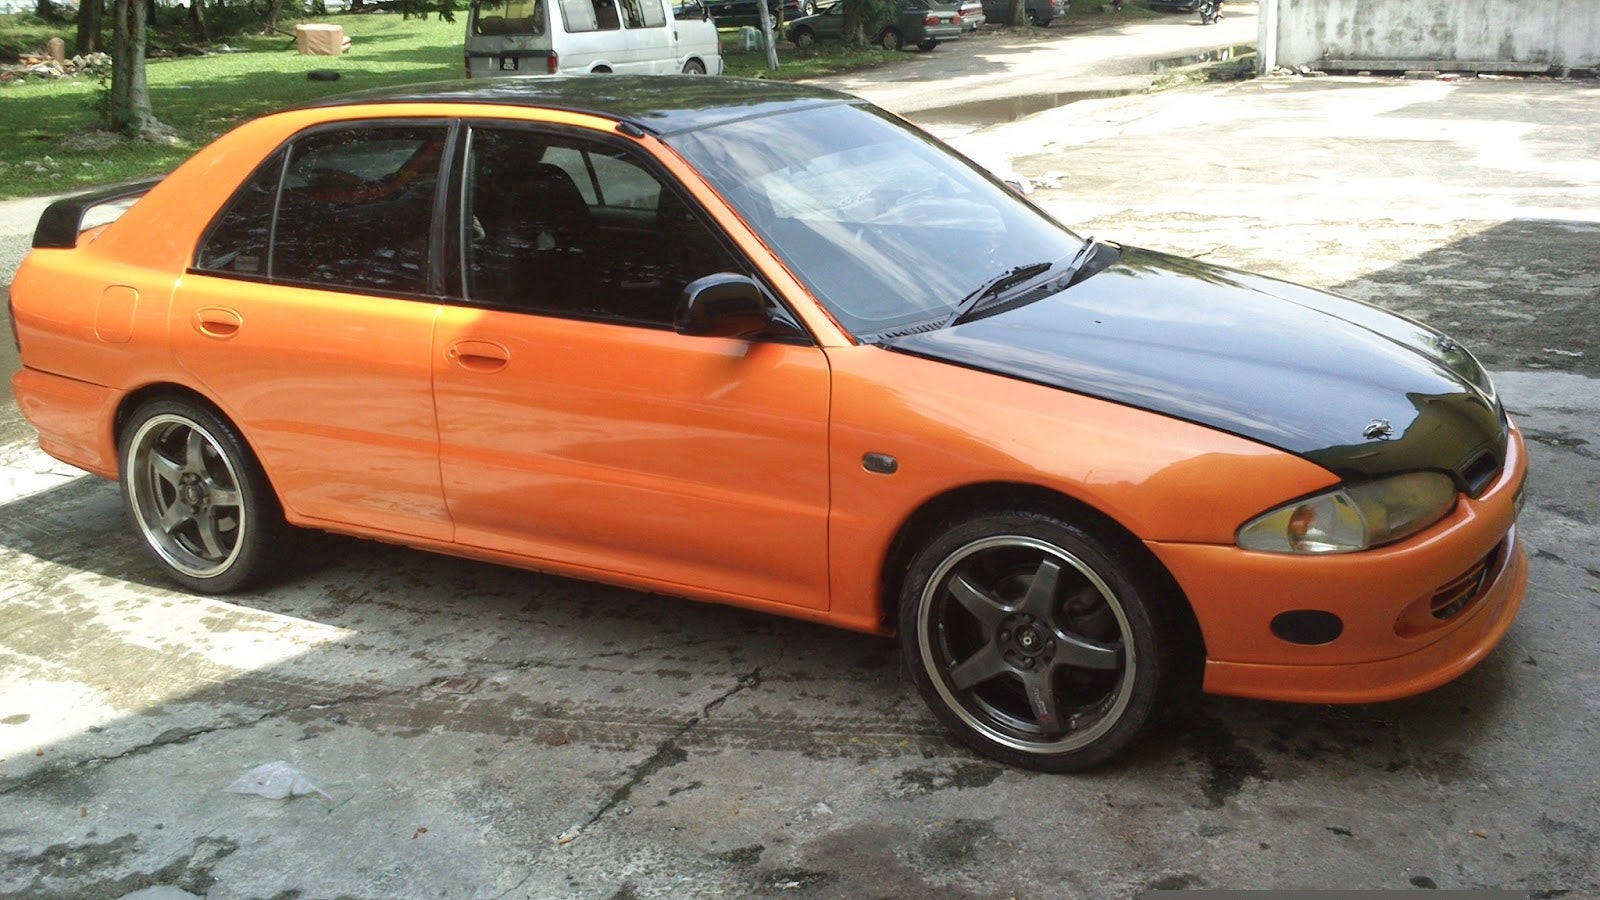 orange and black Proton car